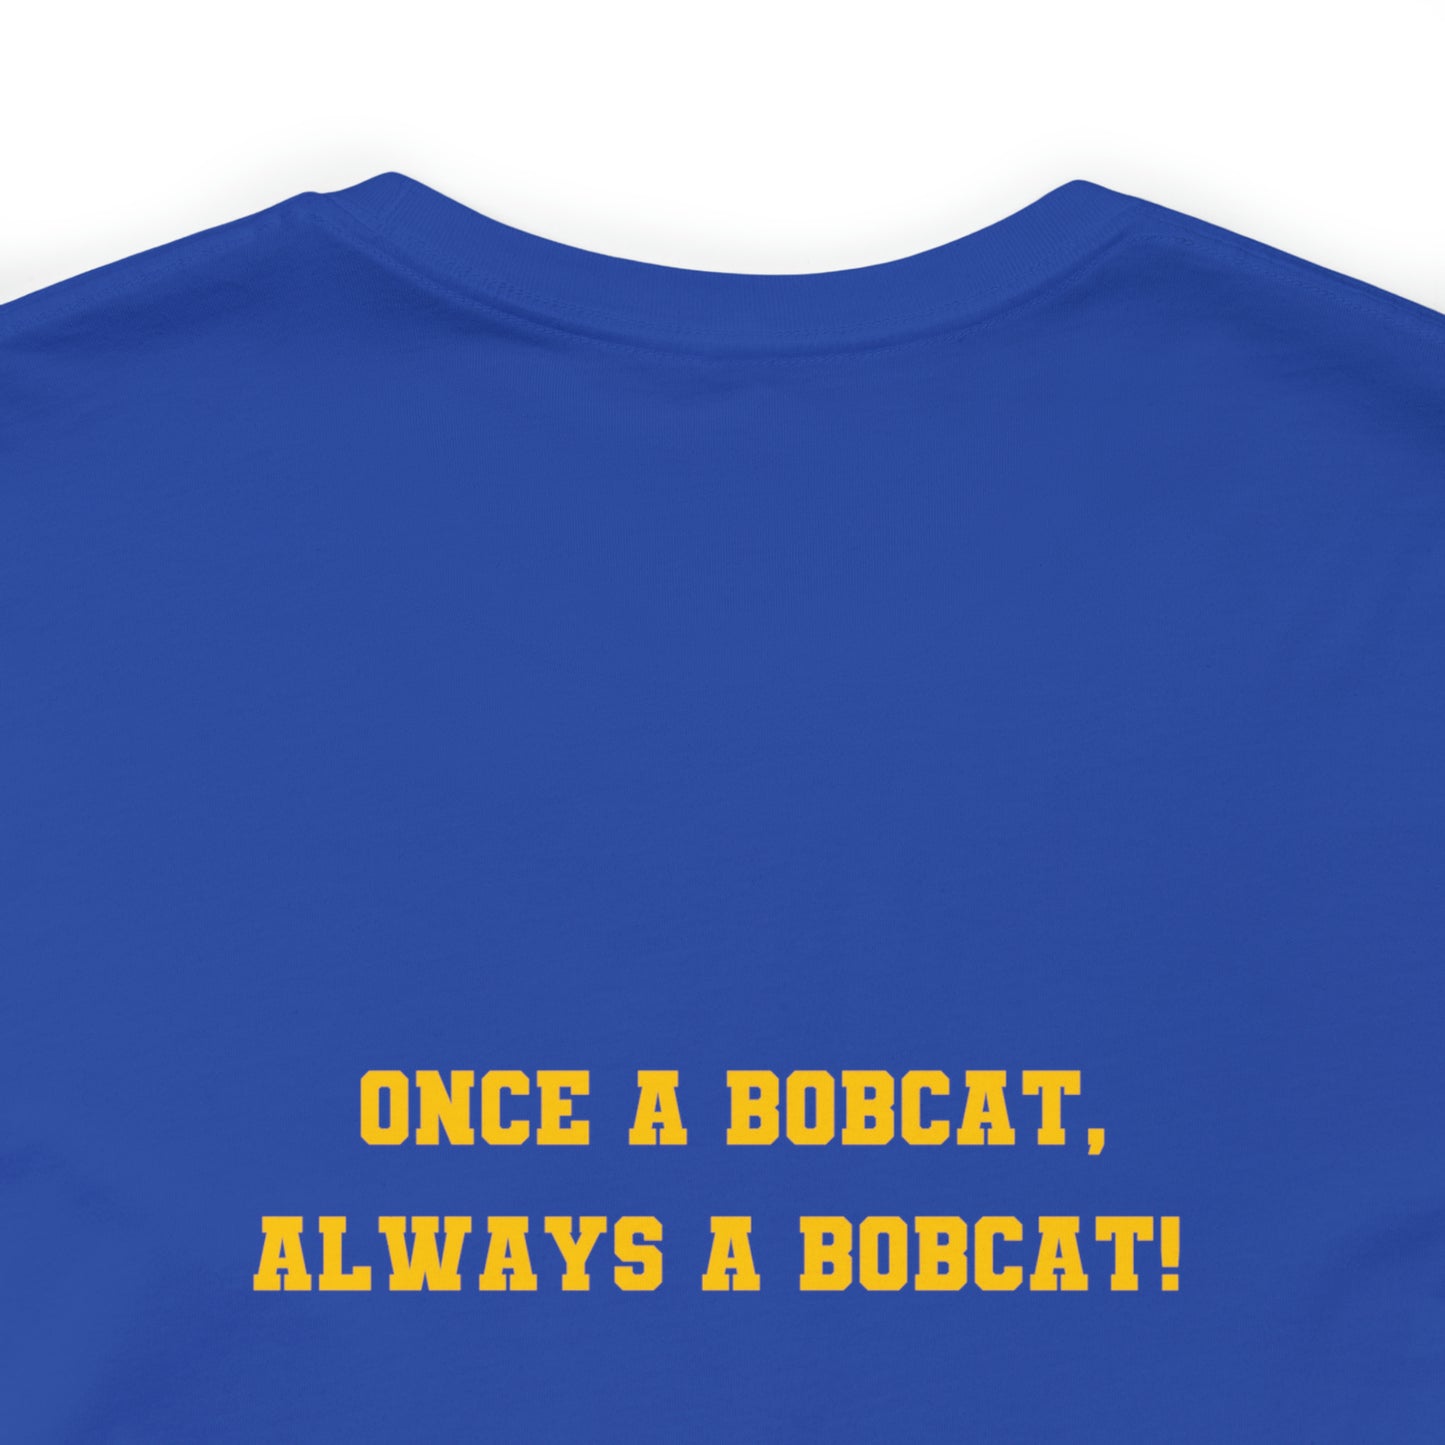 Bowdle Bobcat Throwback Short Sleeve Tee